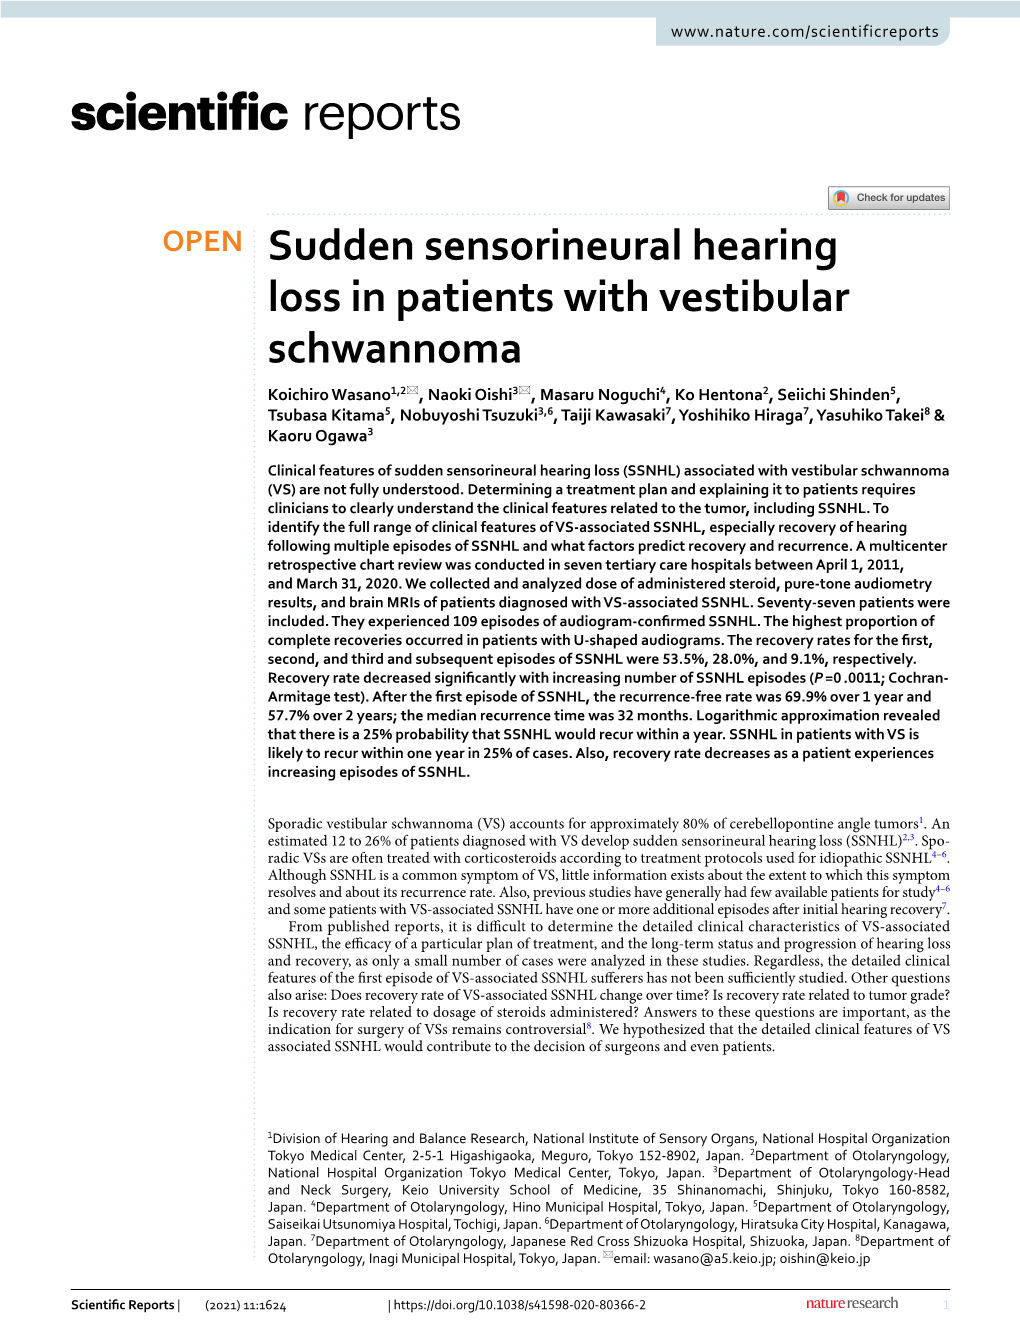 Sudden Sensorineural Hearing Loss in Patients with Vestibular Schwannoma